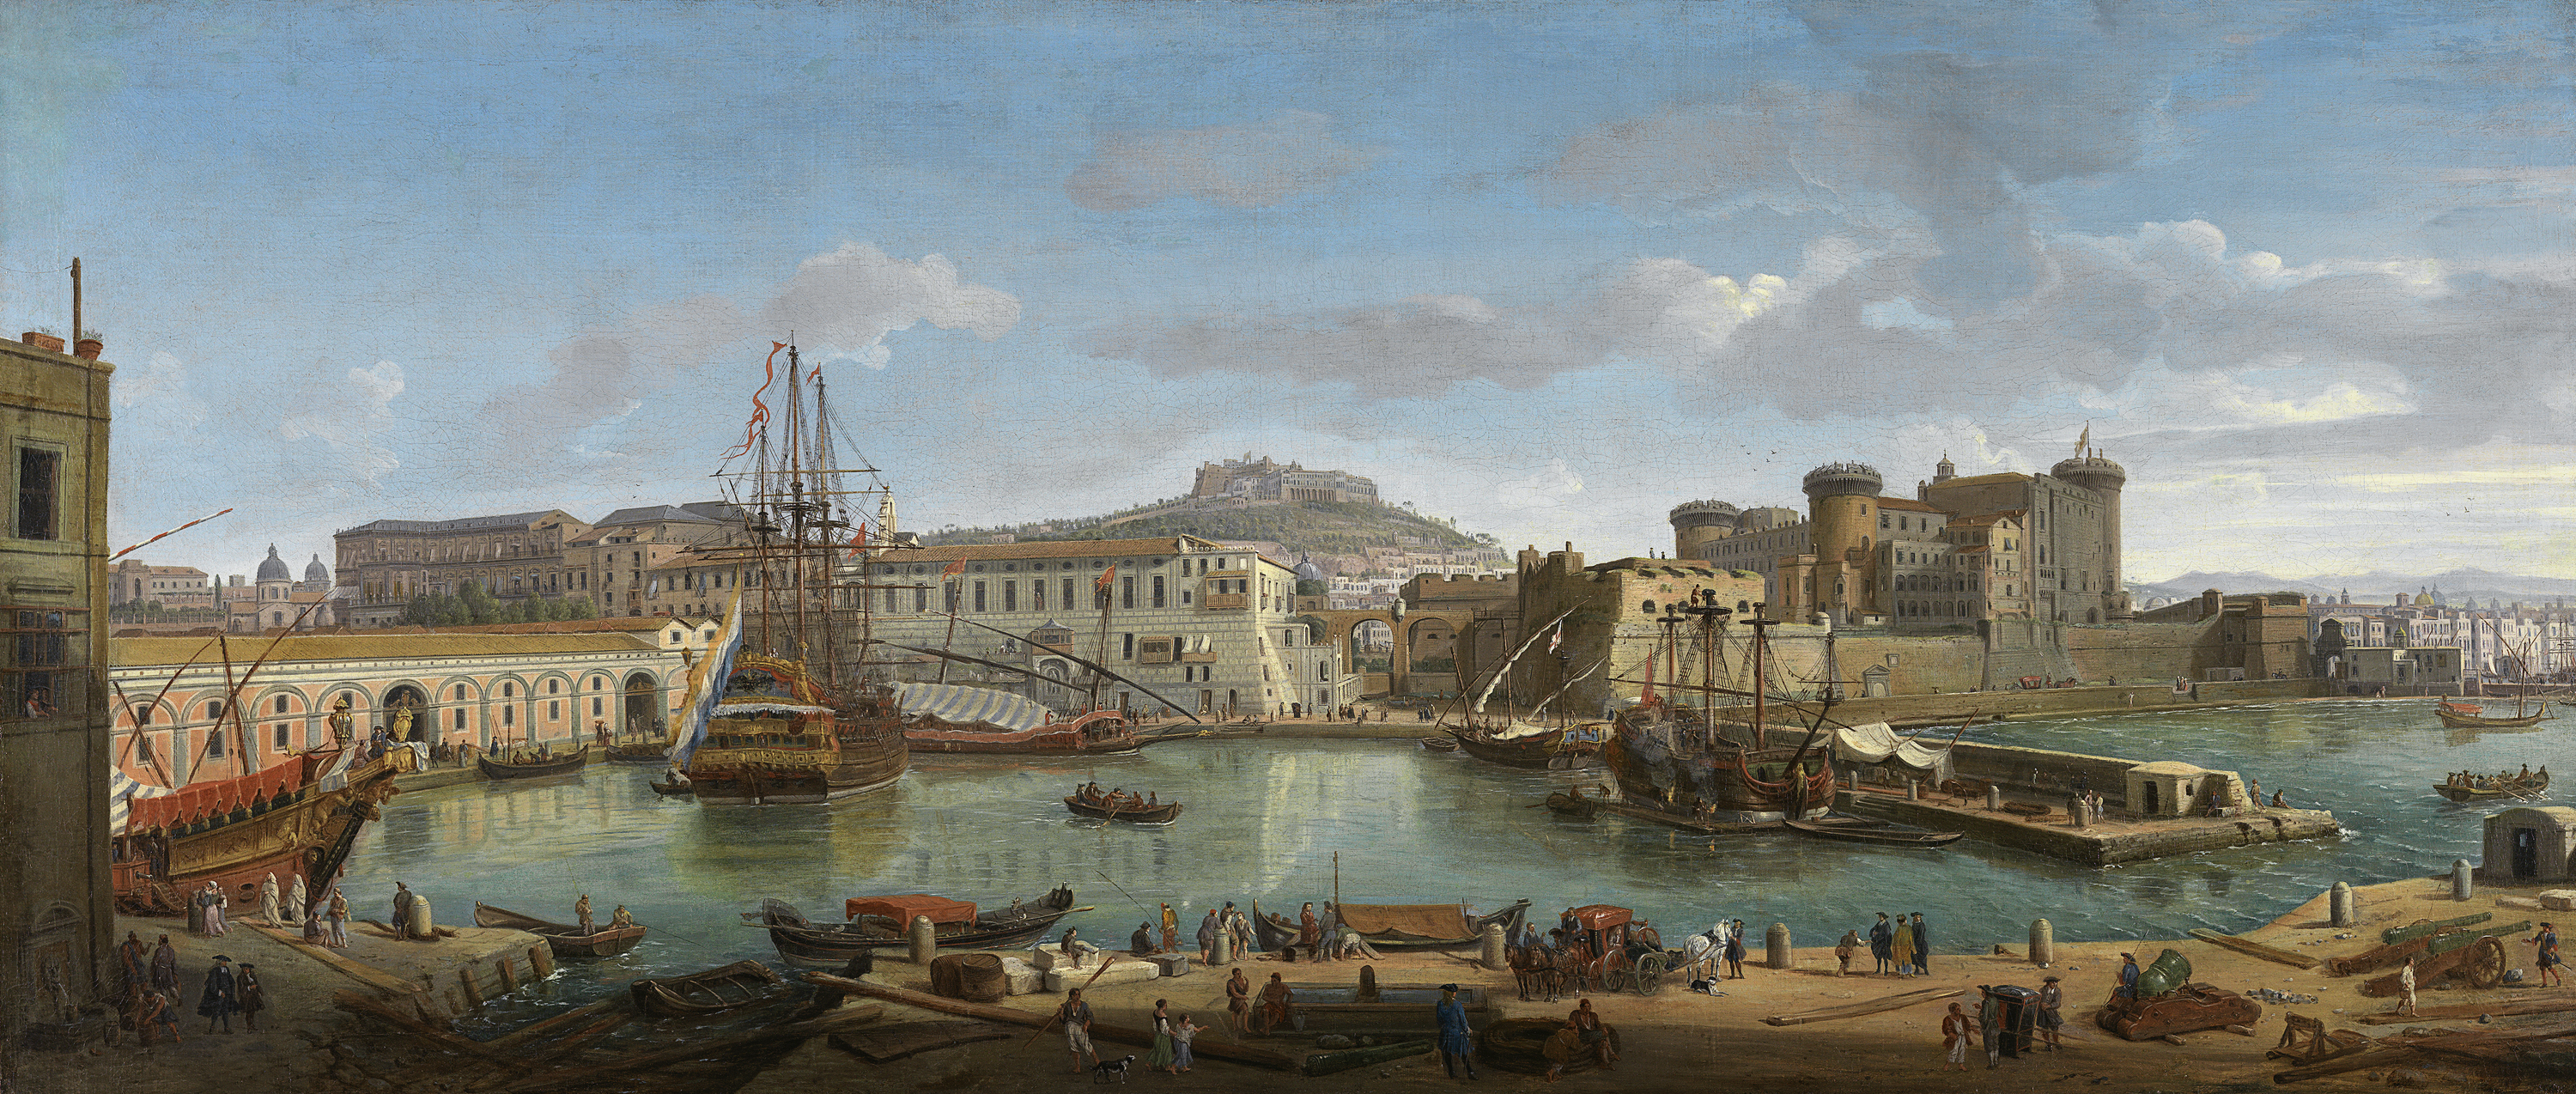 Goodwill Stapel Meting The Darsena, Naples - Wittel, Gaspar van. Museo Nacional Thyssen-Bornemisza